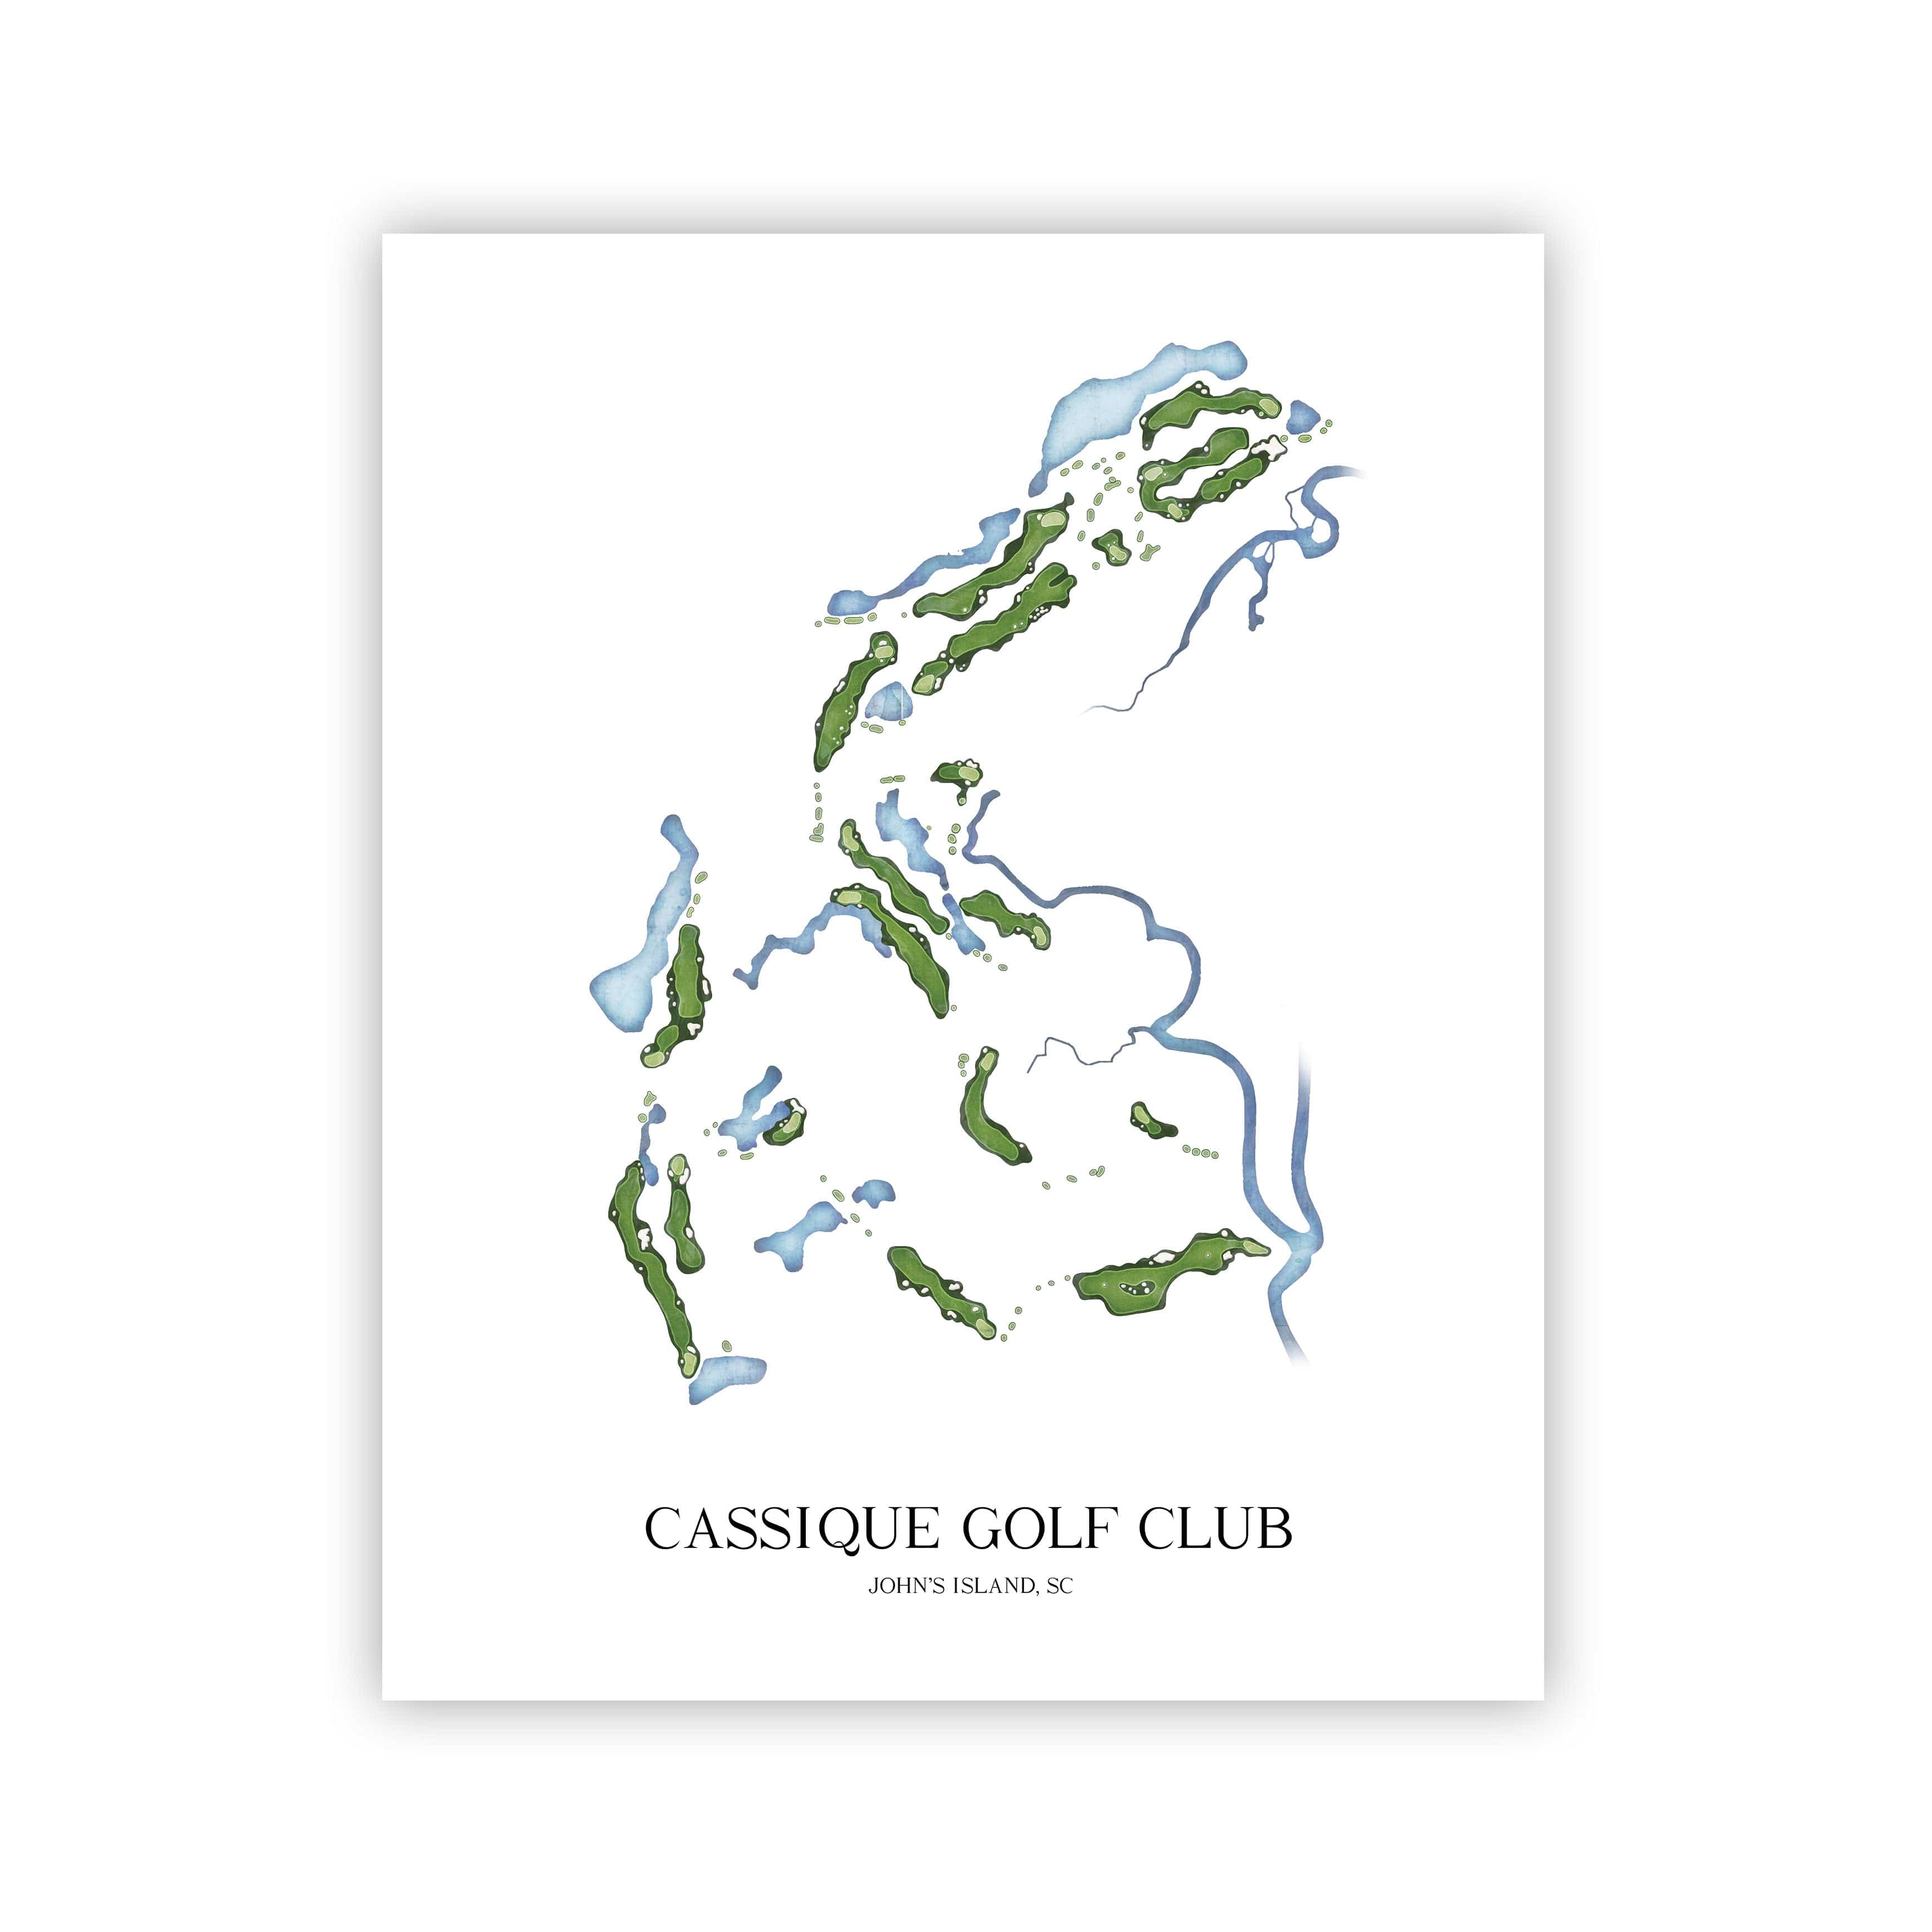 The 19th Hole Golf Shop - Golf Course Prints -  Cassique Golf Club Golf Course Map